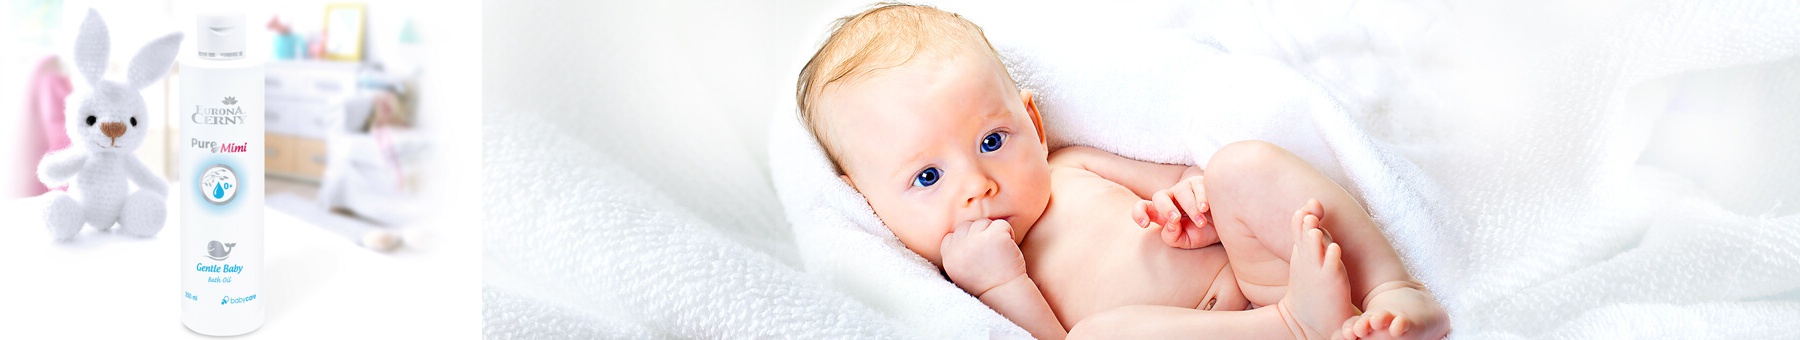 Eurona Cerny Pure Mimi Gentle Baby Bath Oil